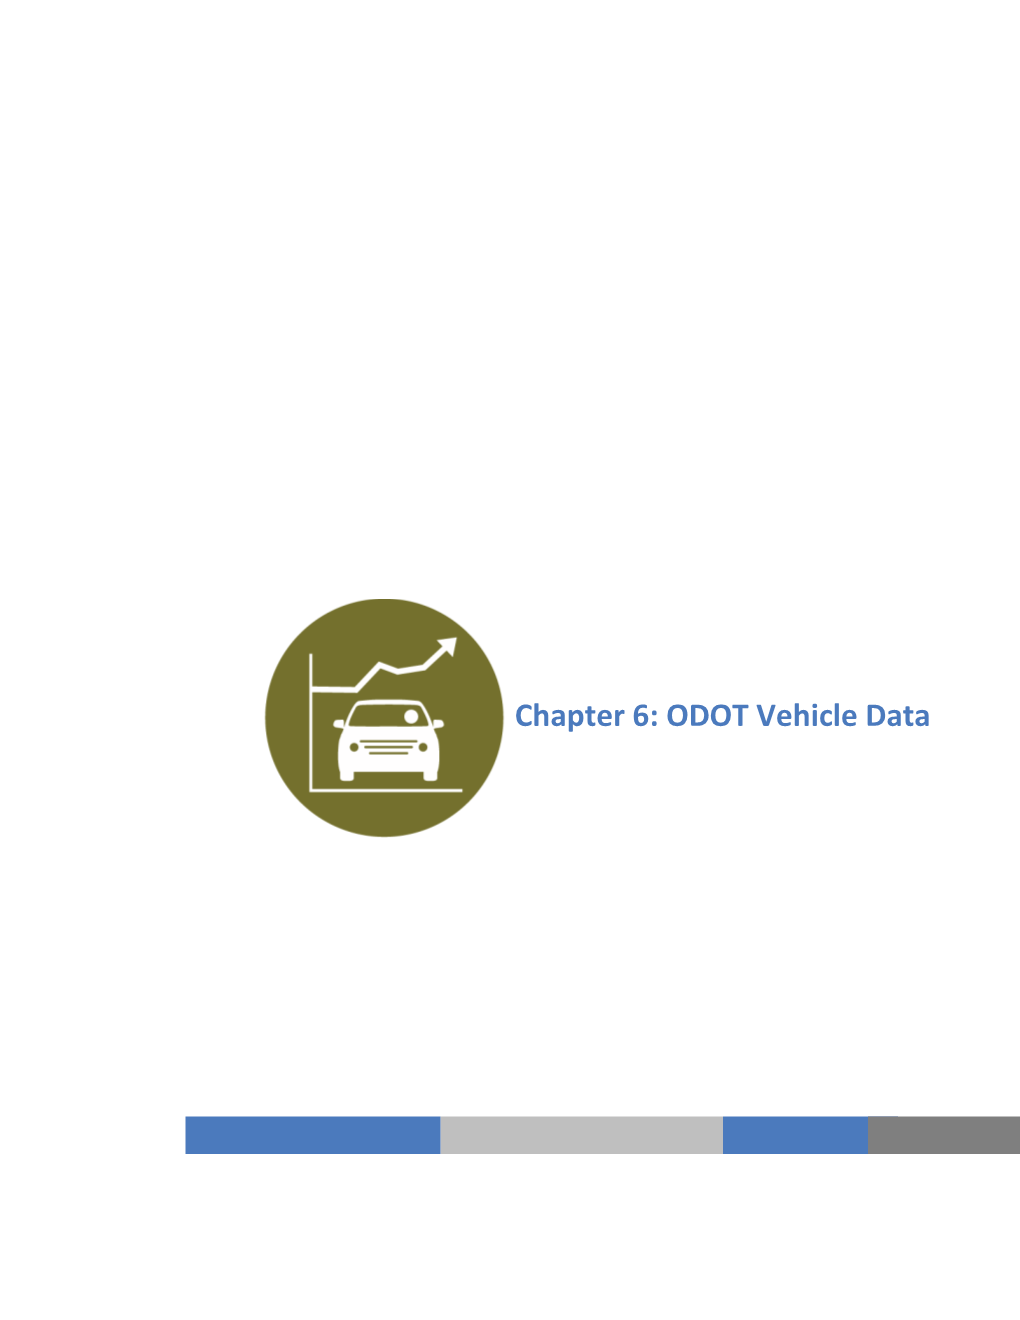 Chapter 6: ODOT Vehicle Data